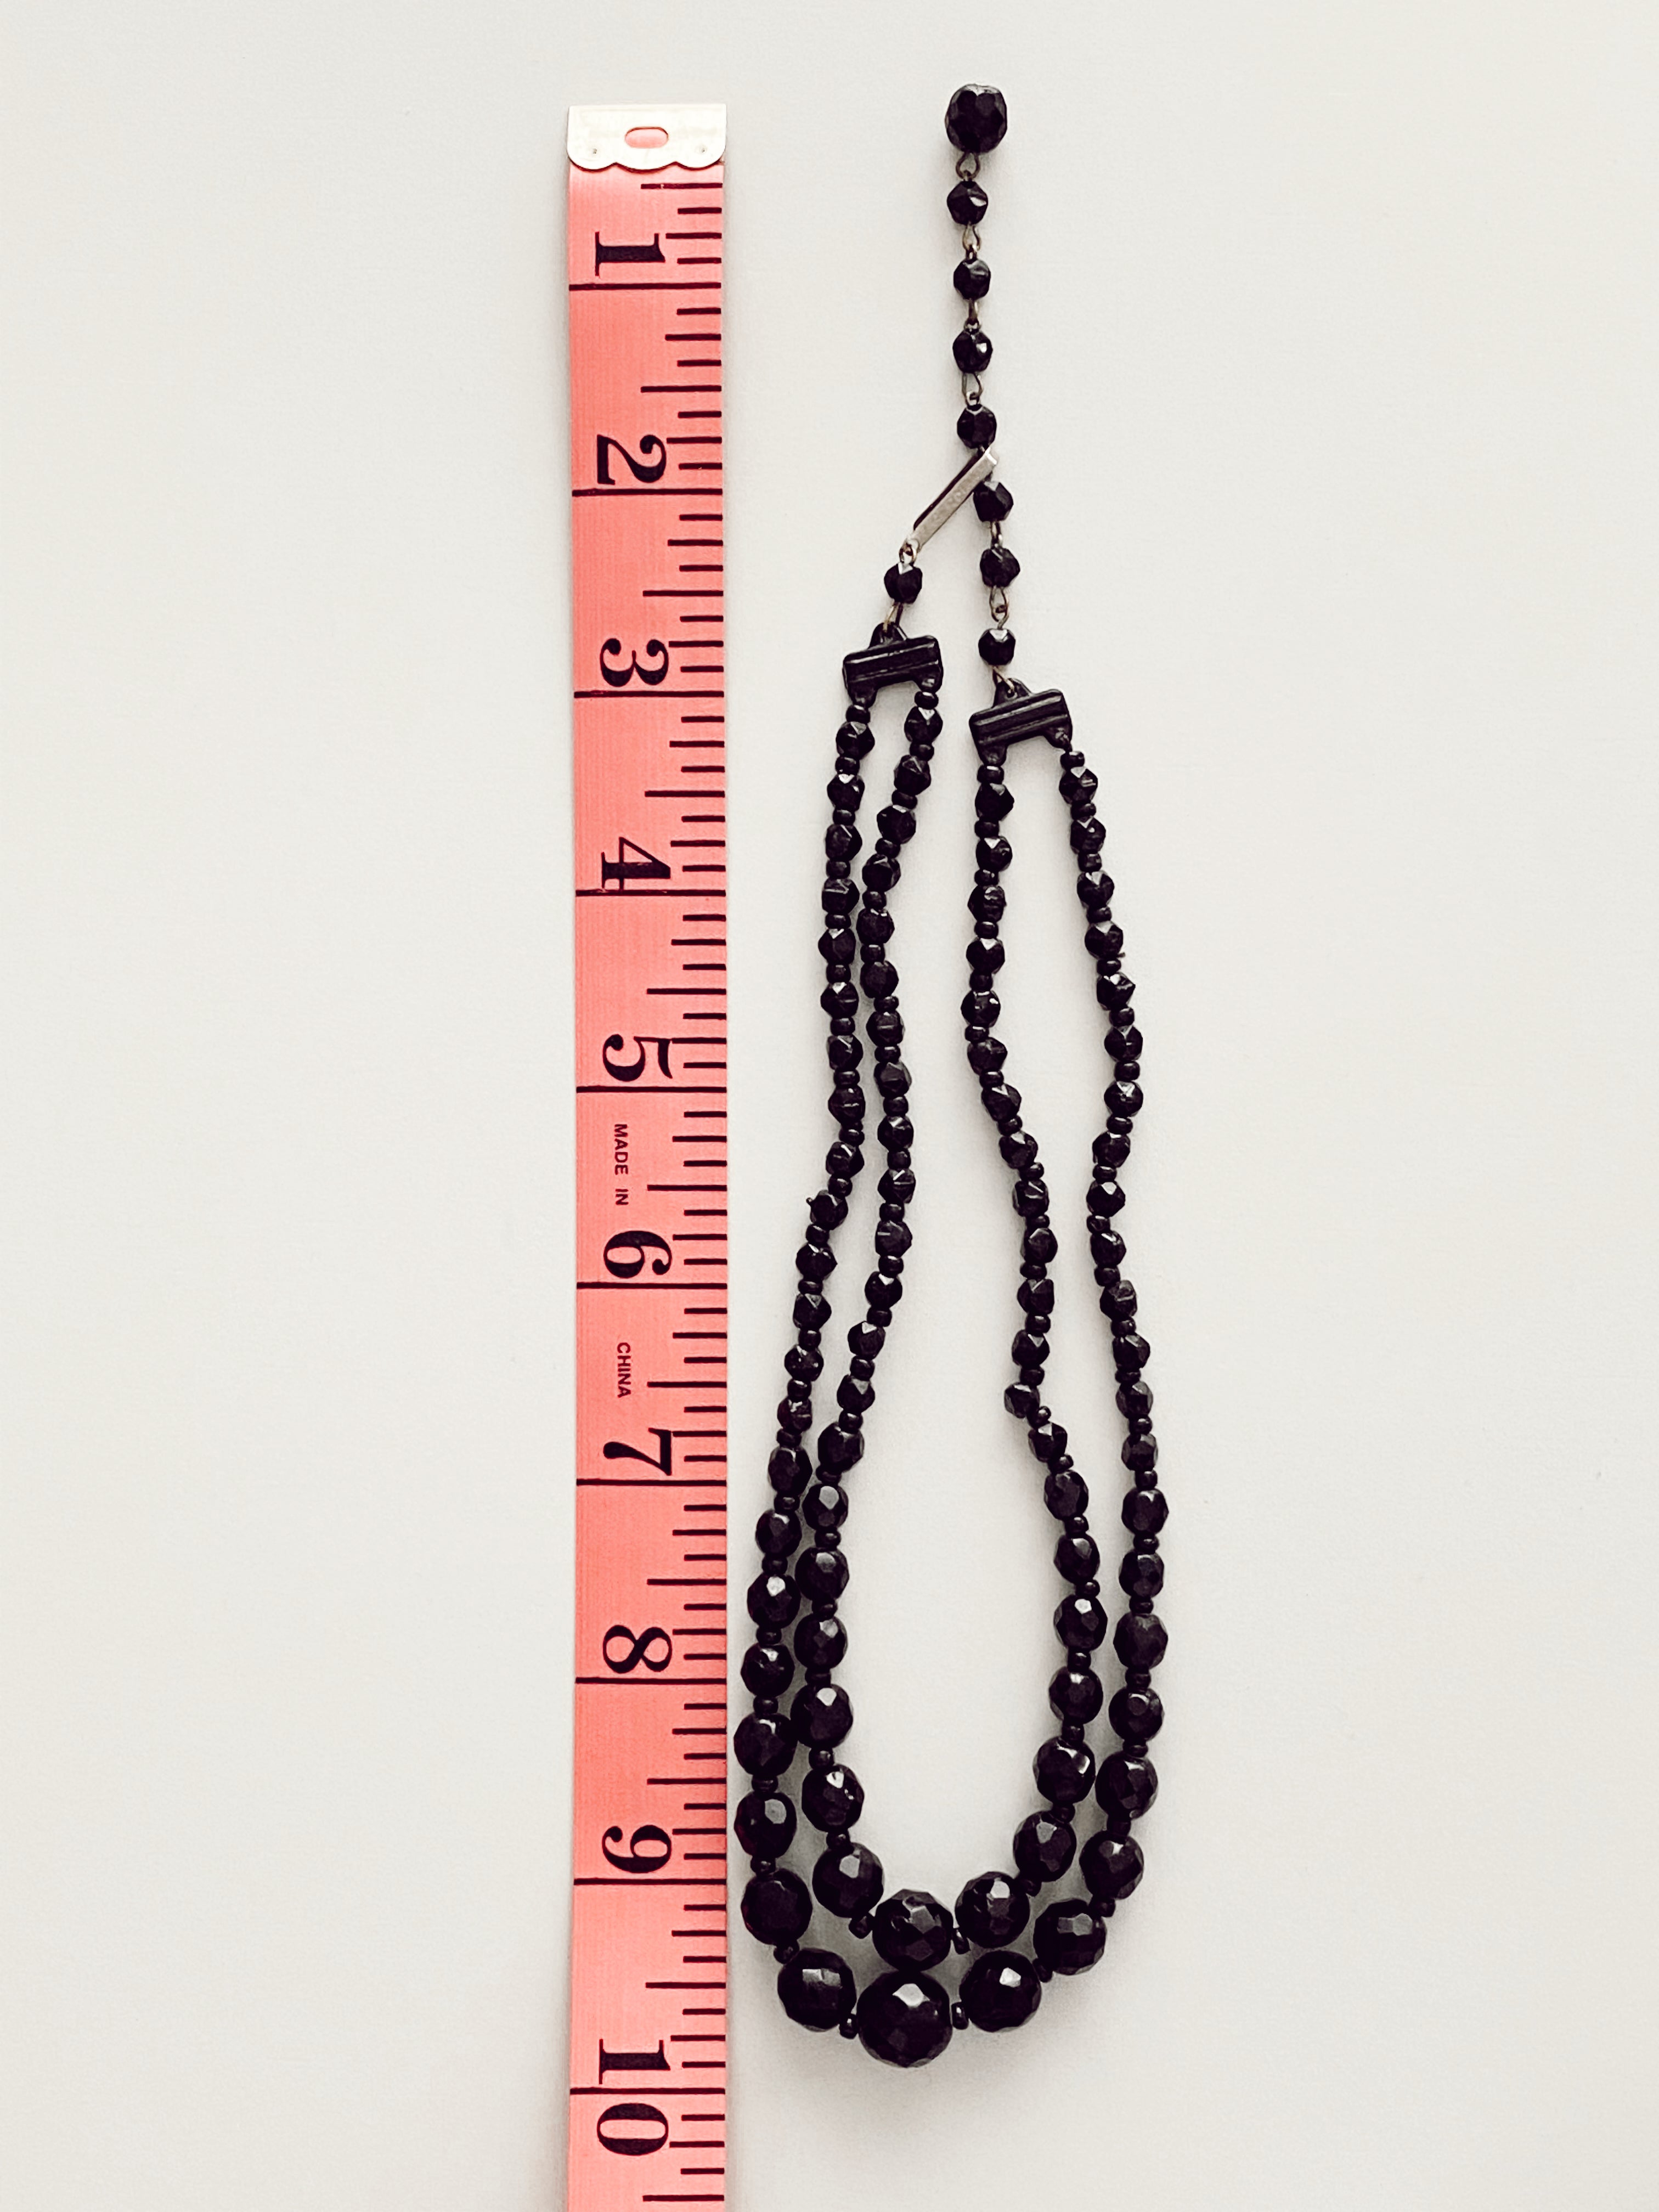 Vintage German Glass Black Beads Necklace